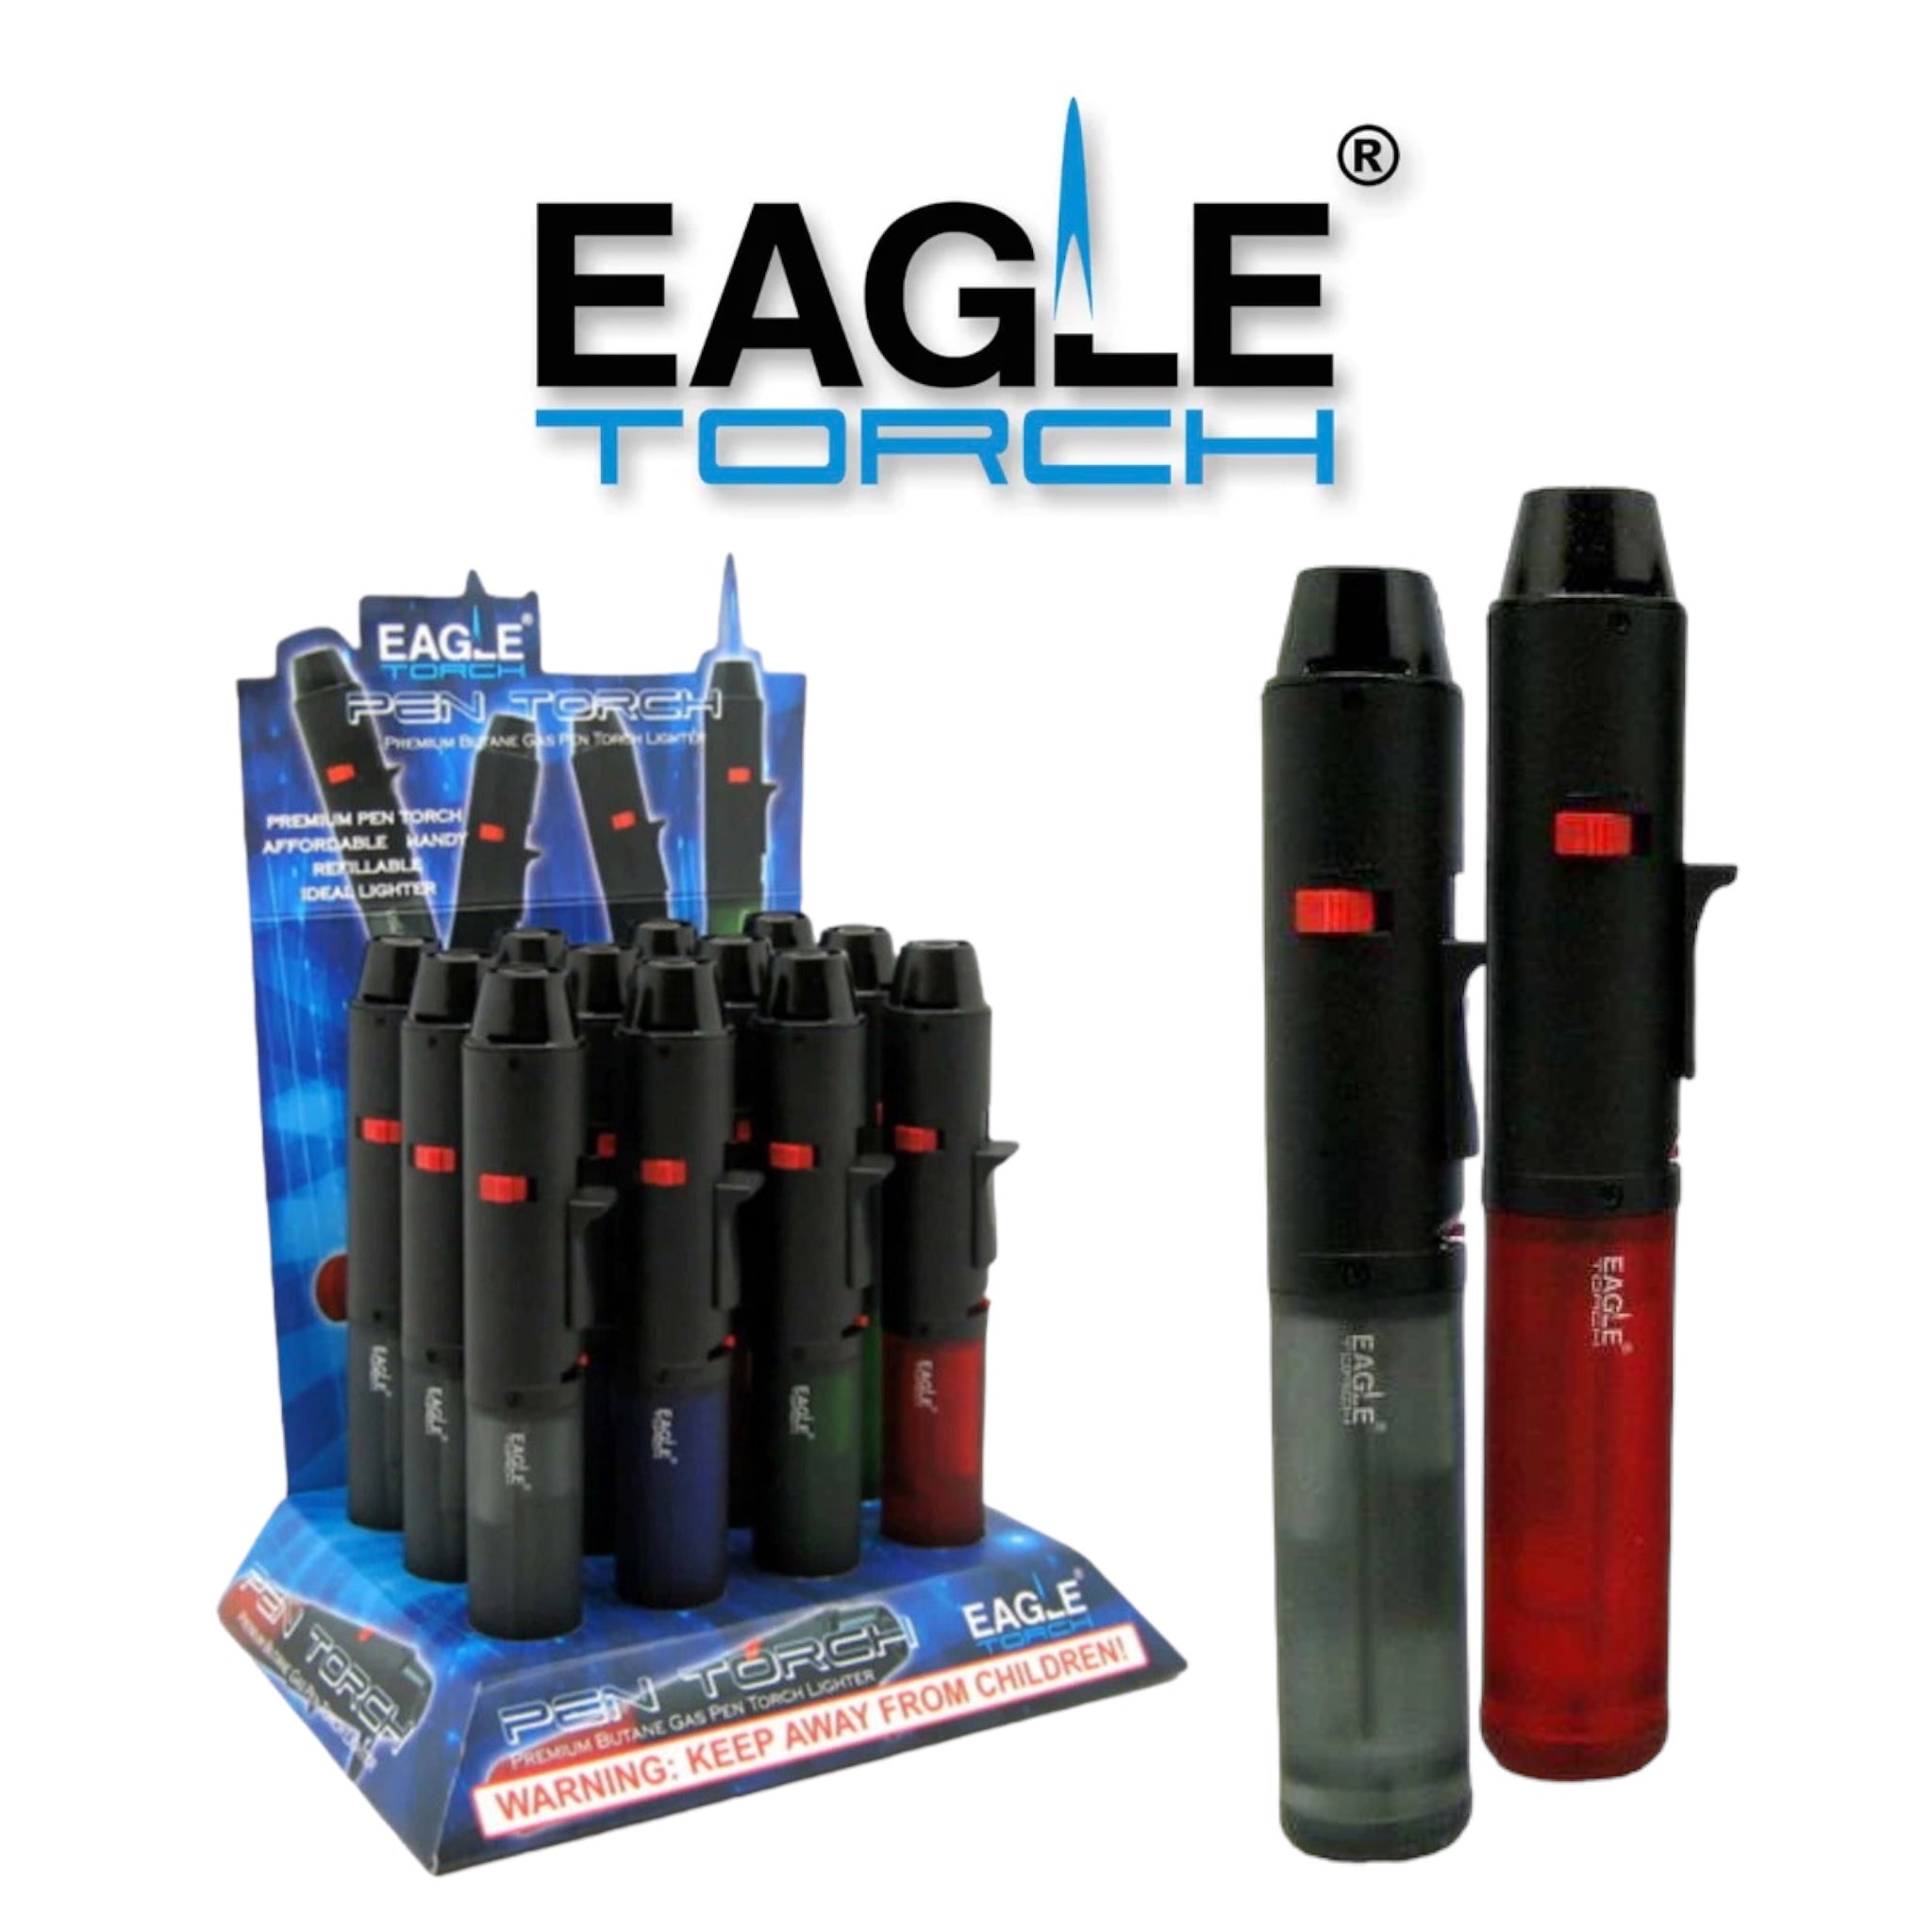 Eagle Torch Gun 15ct Display